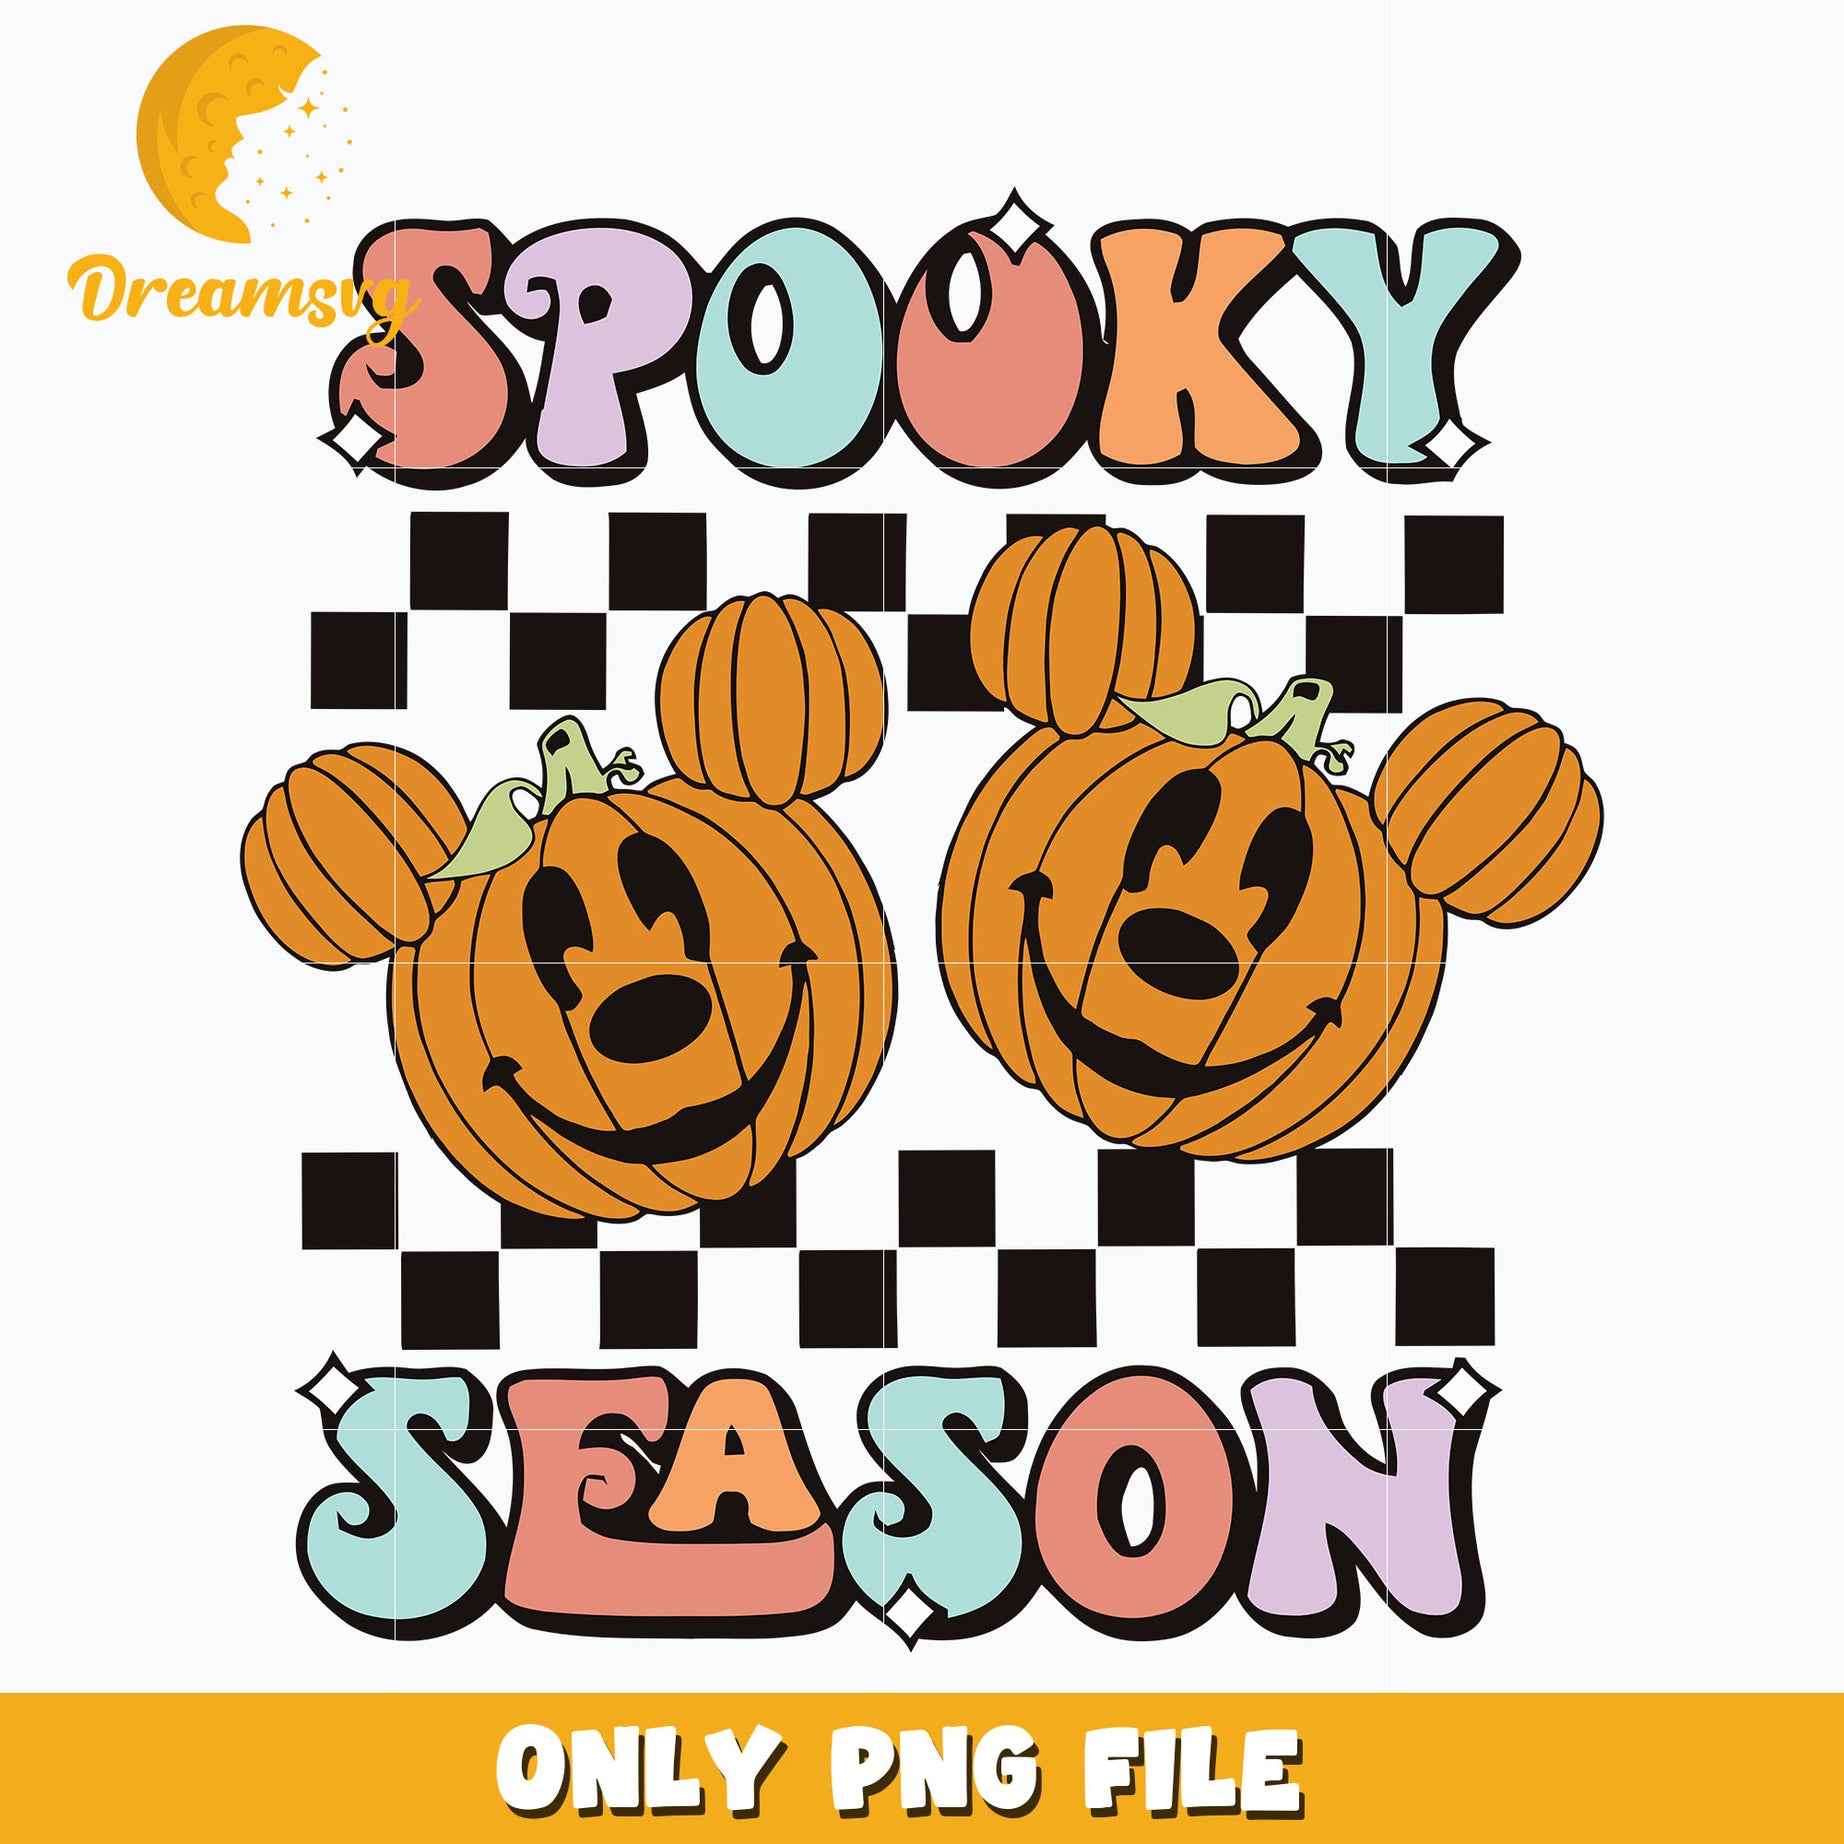 Spooky season halloween png